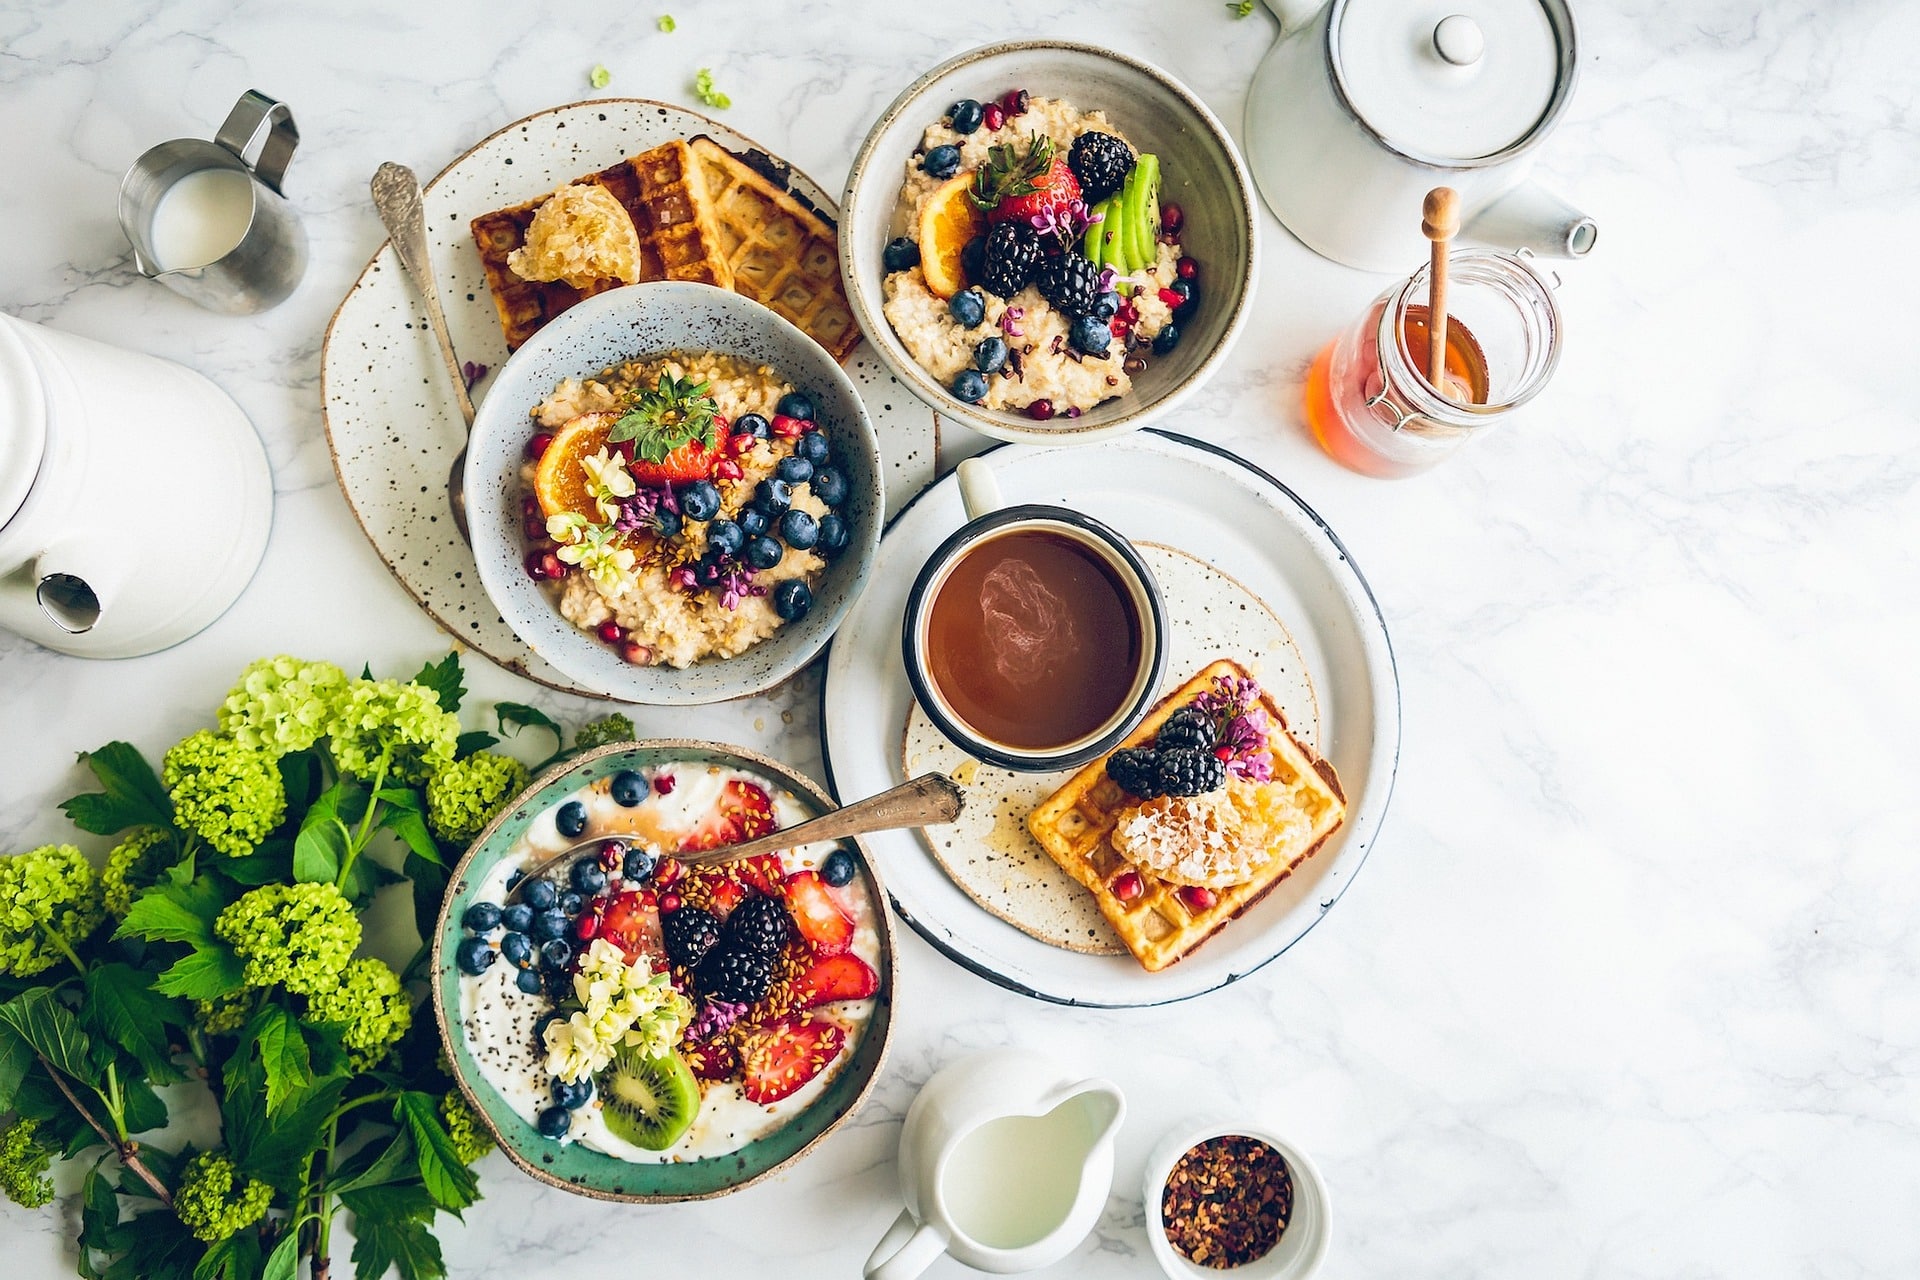 Healthy hotel breakfasts